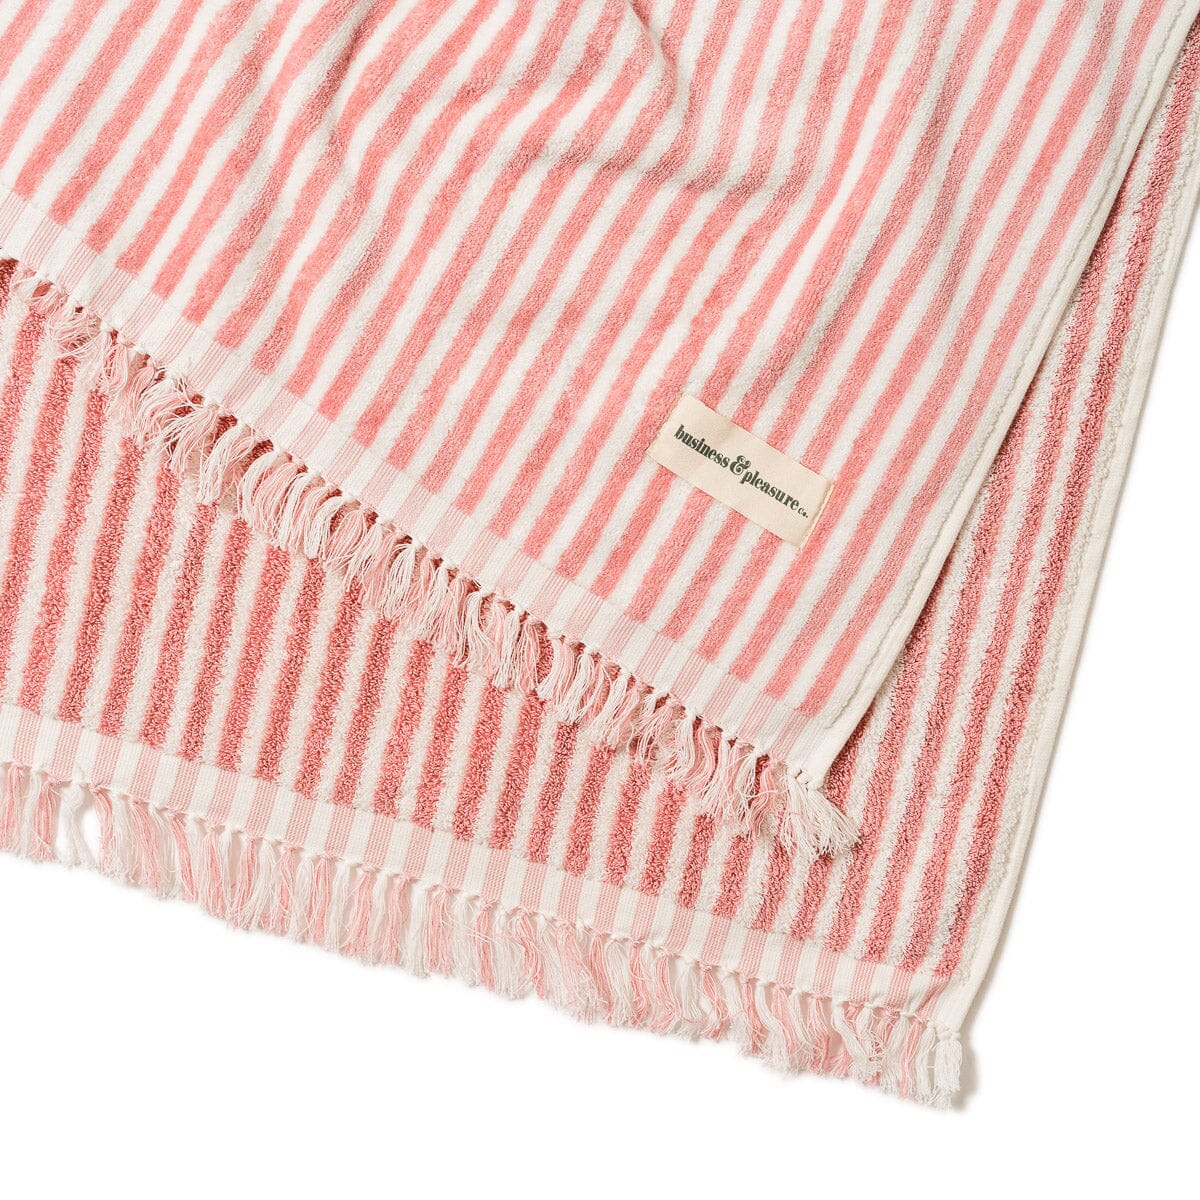 The Beach Blanket - Lauren's Pink Stripe Beach Blanket Business & Pleasure Co 